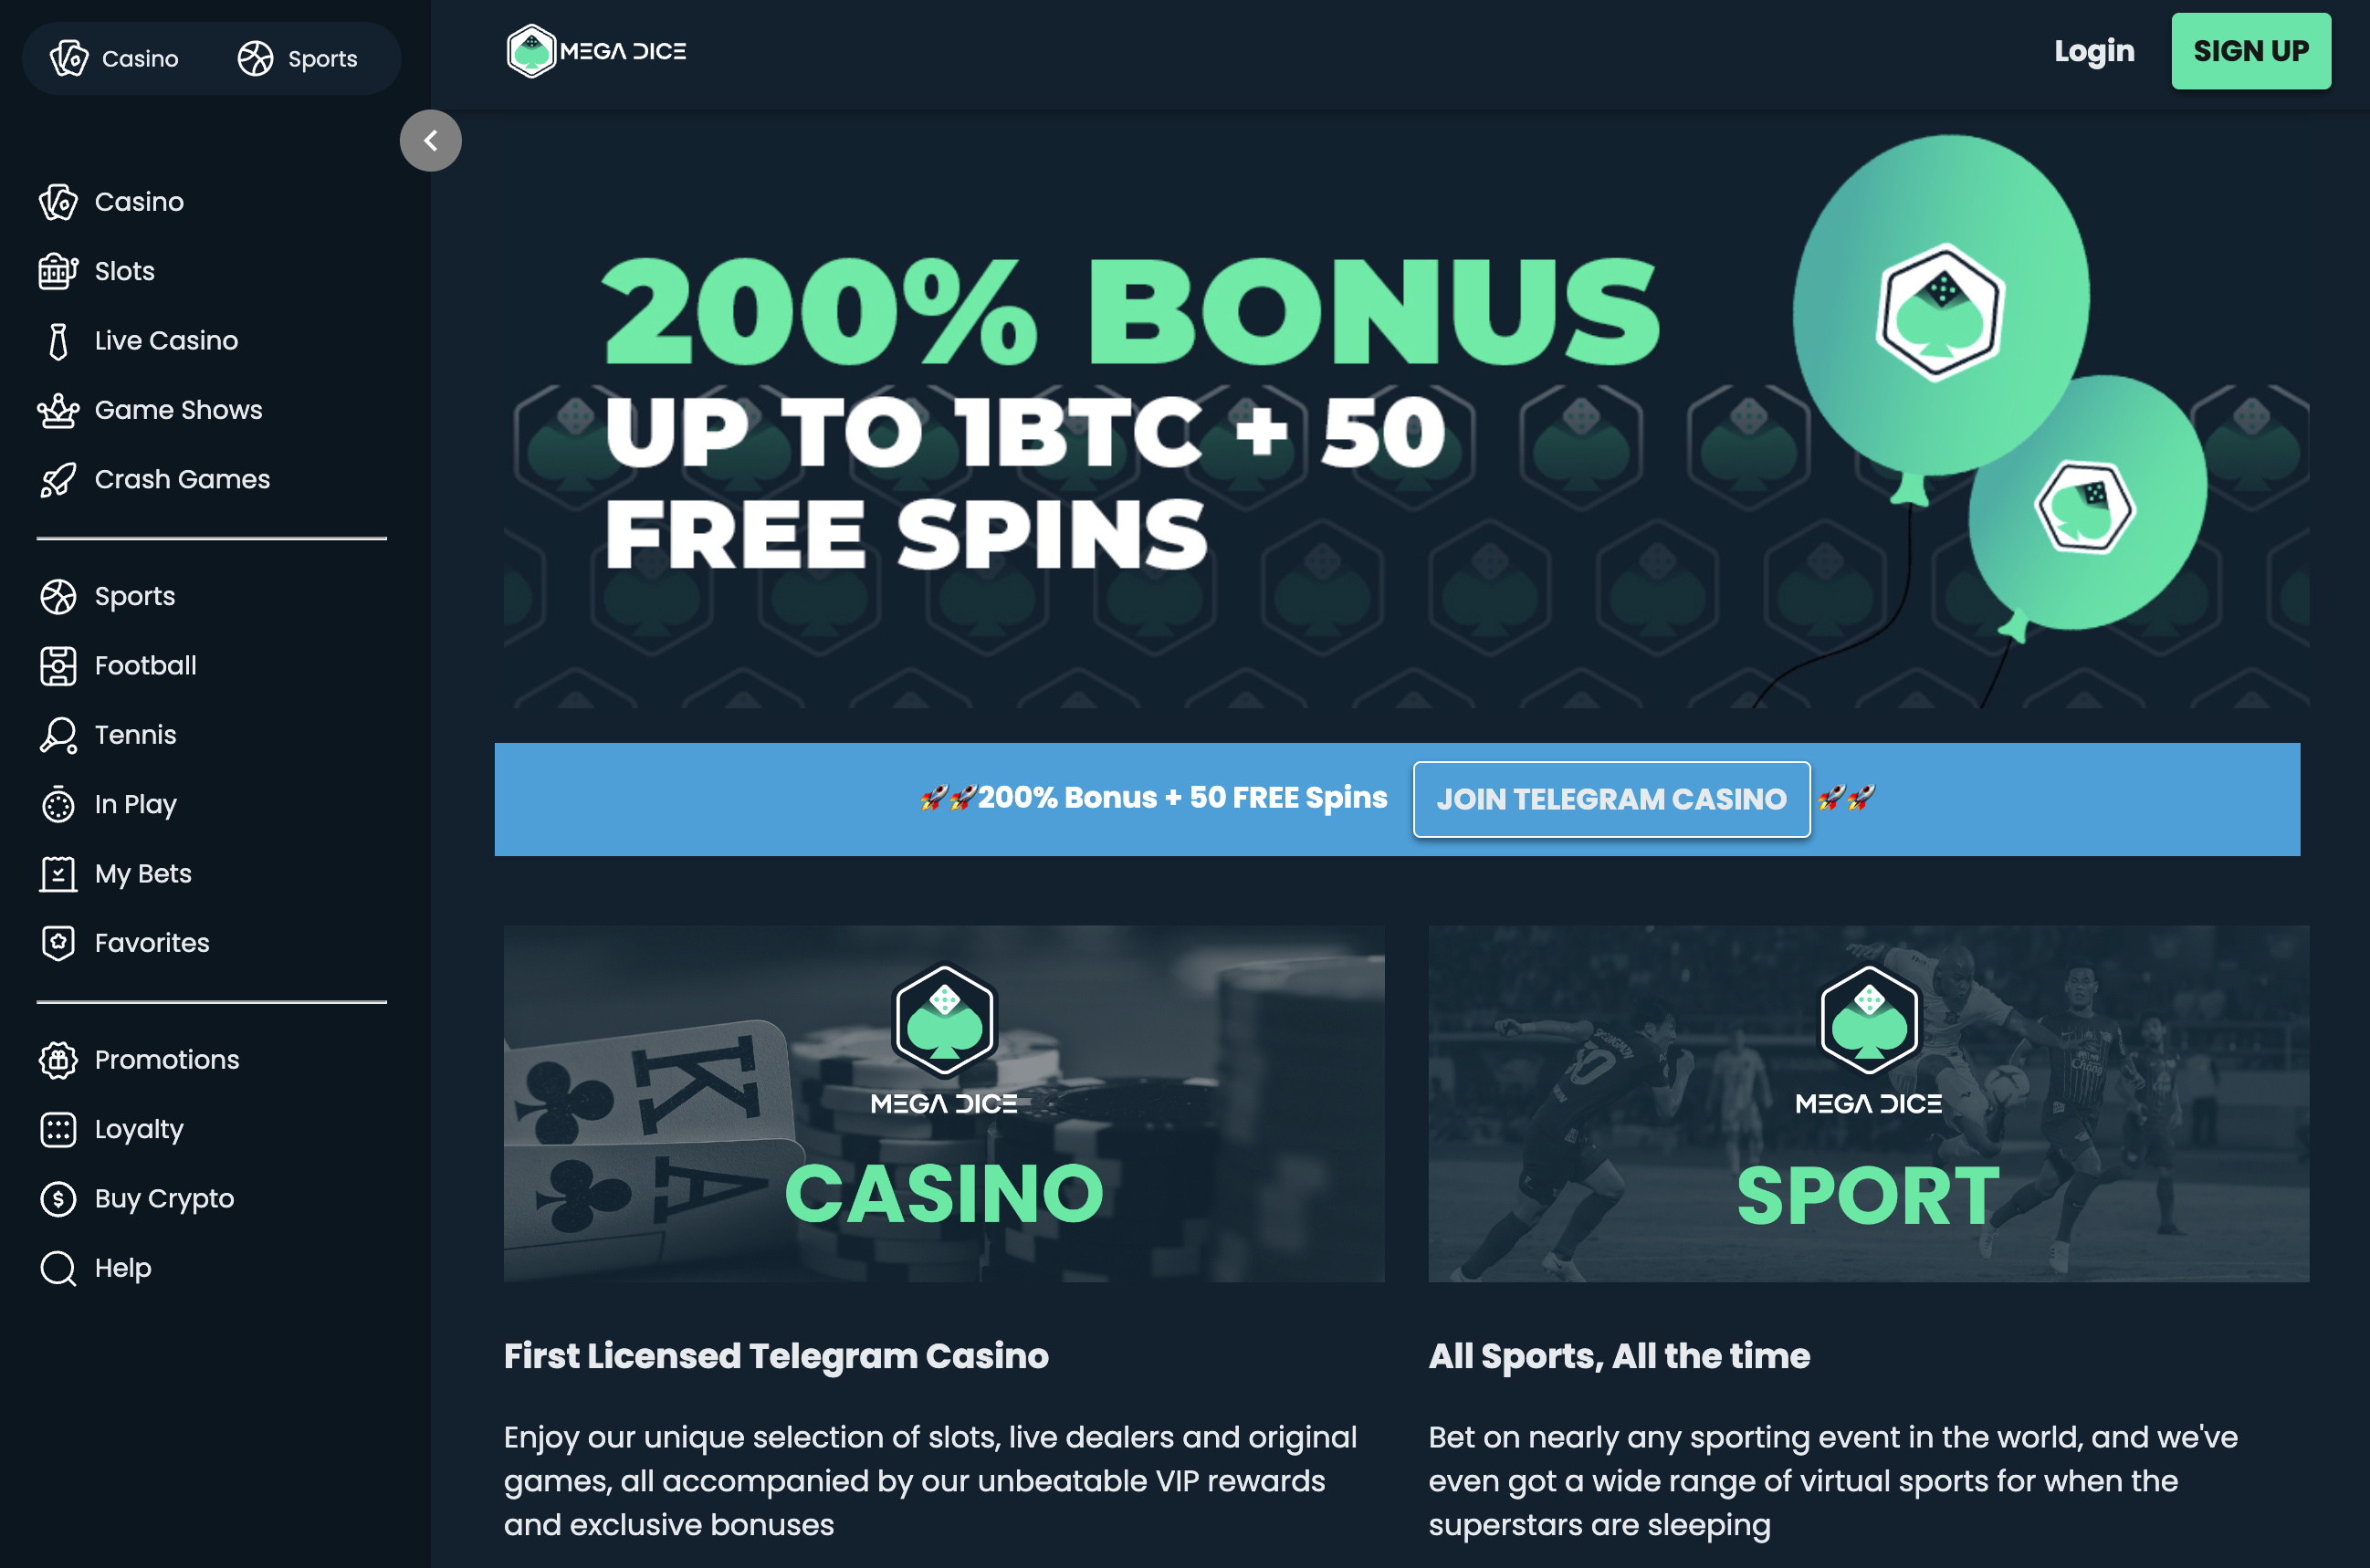 mega dice website 200% deposit bonus